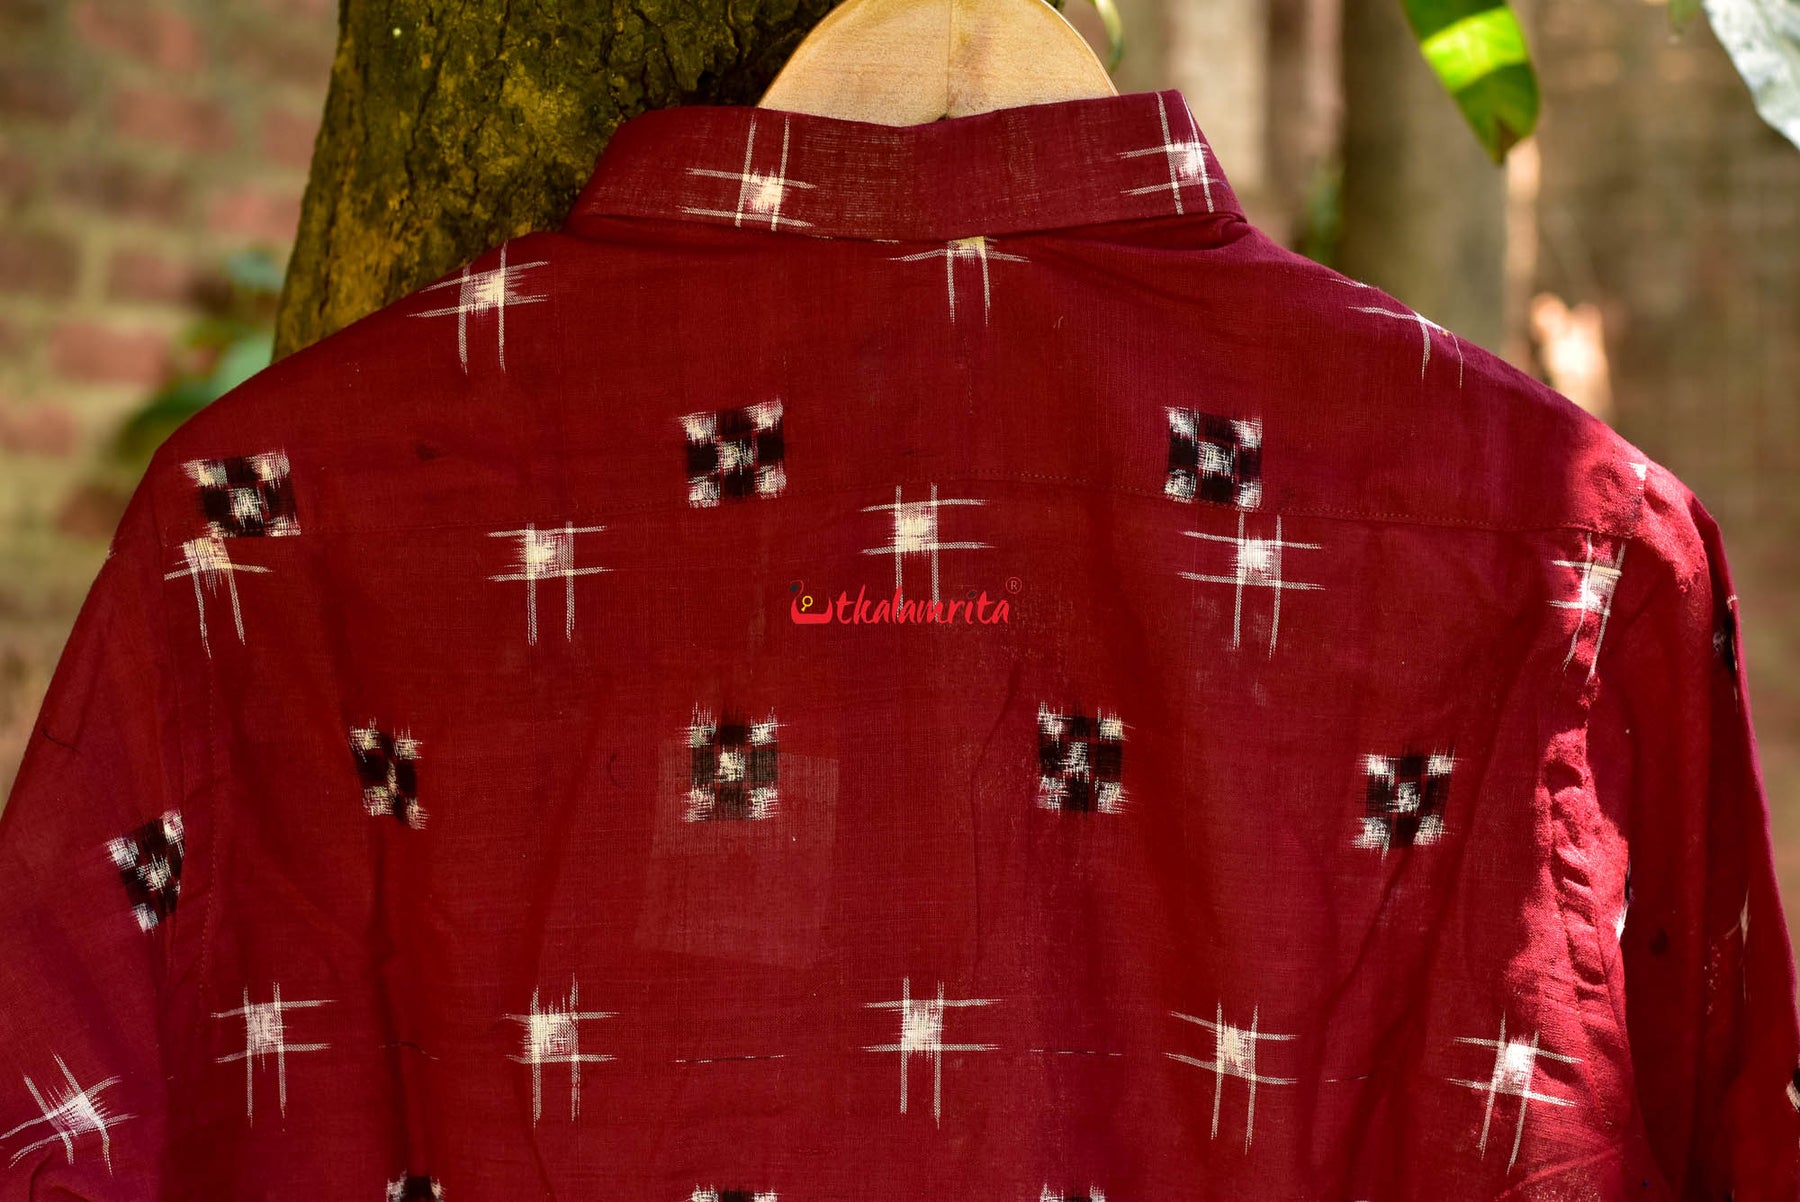 Red Star Sakta (Half Shirt)